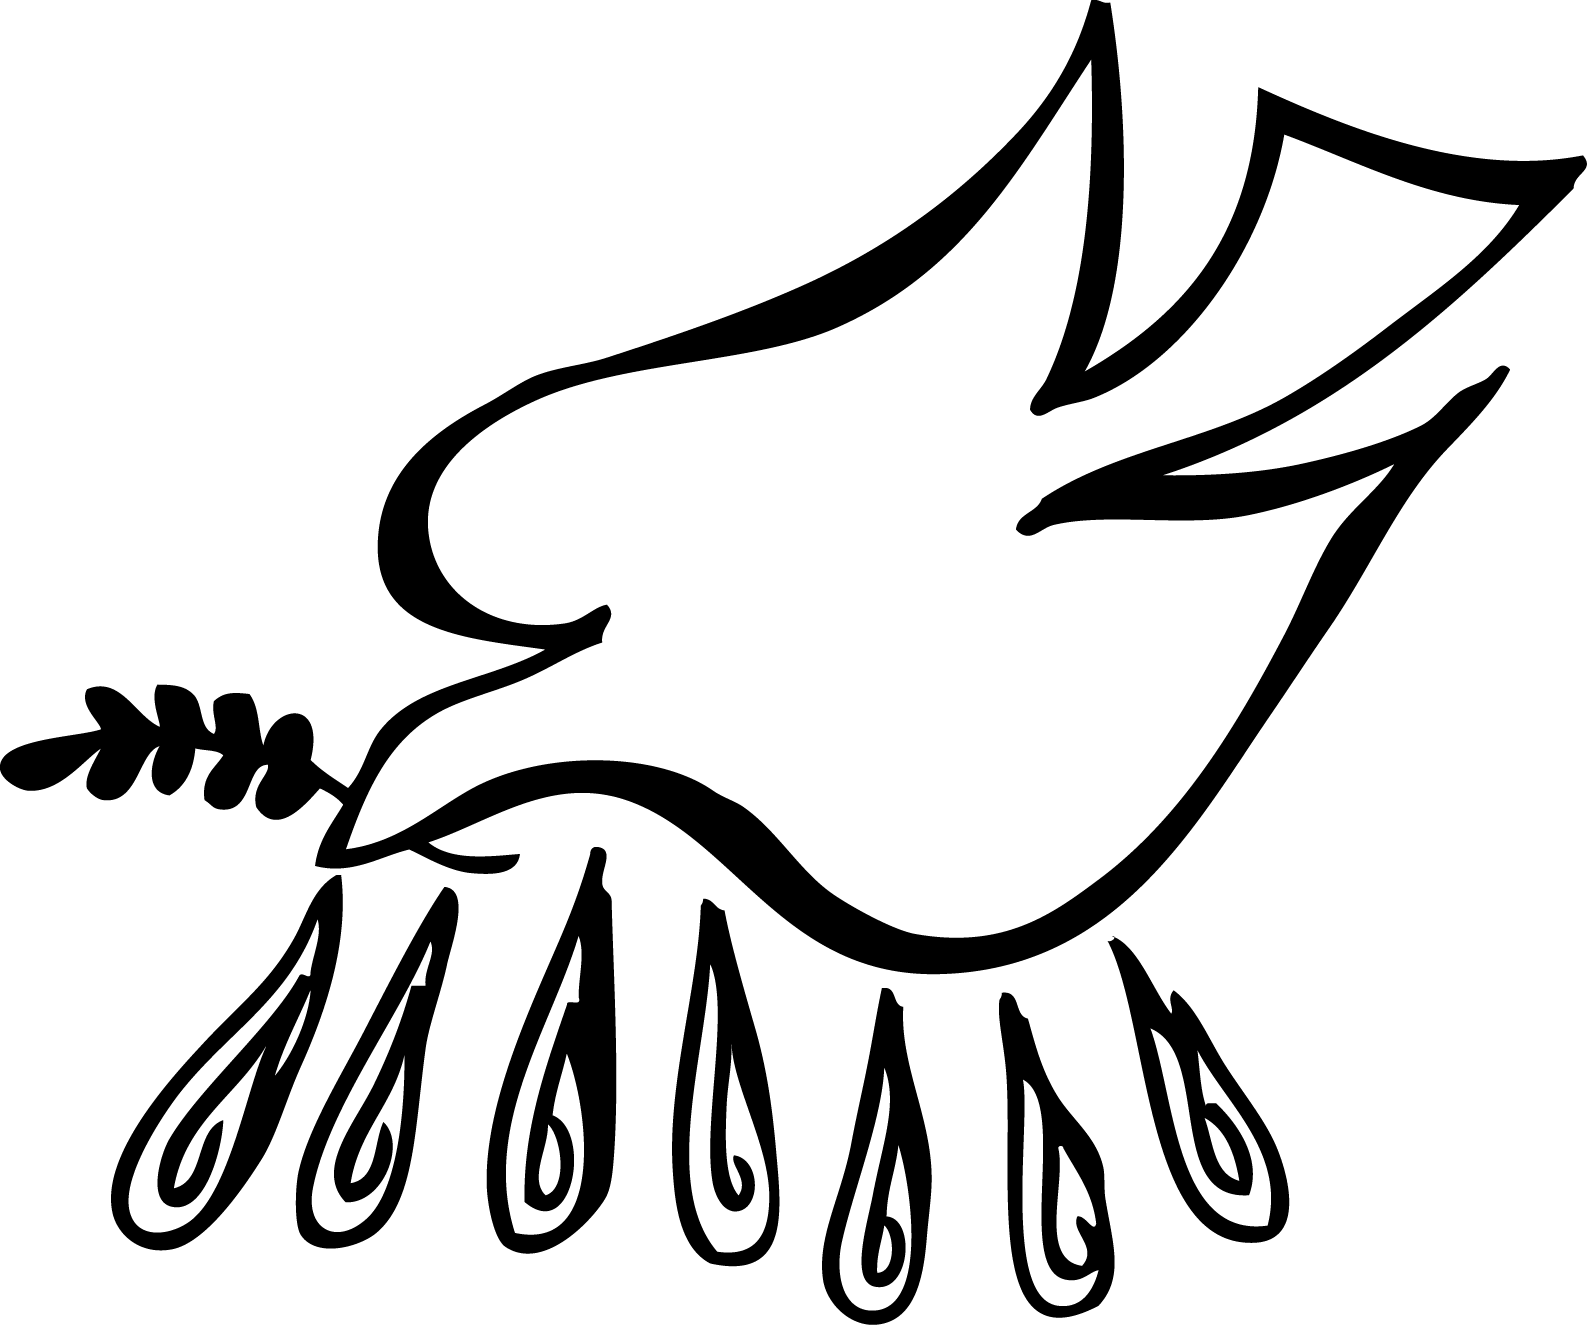 Spirit Black and White Logo - Free Holy Spirit Clipart, Download Free Clip Art, Free Clip Art on ...